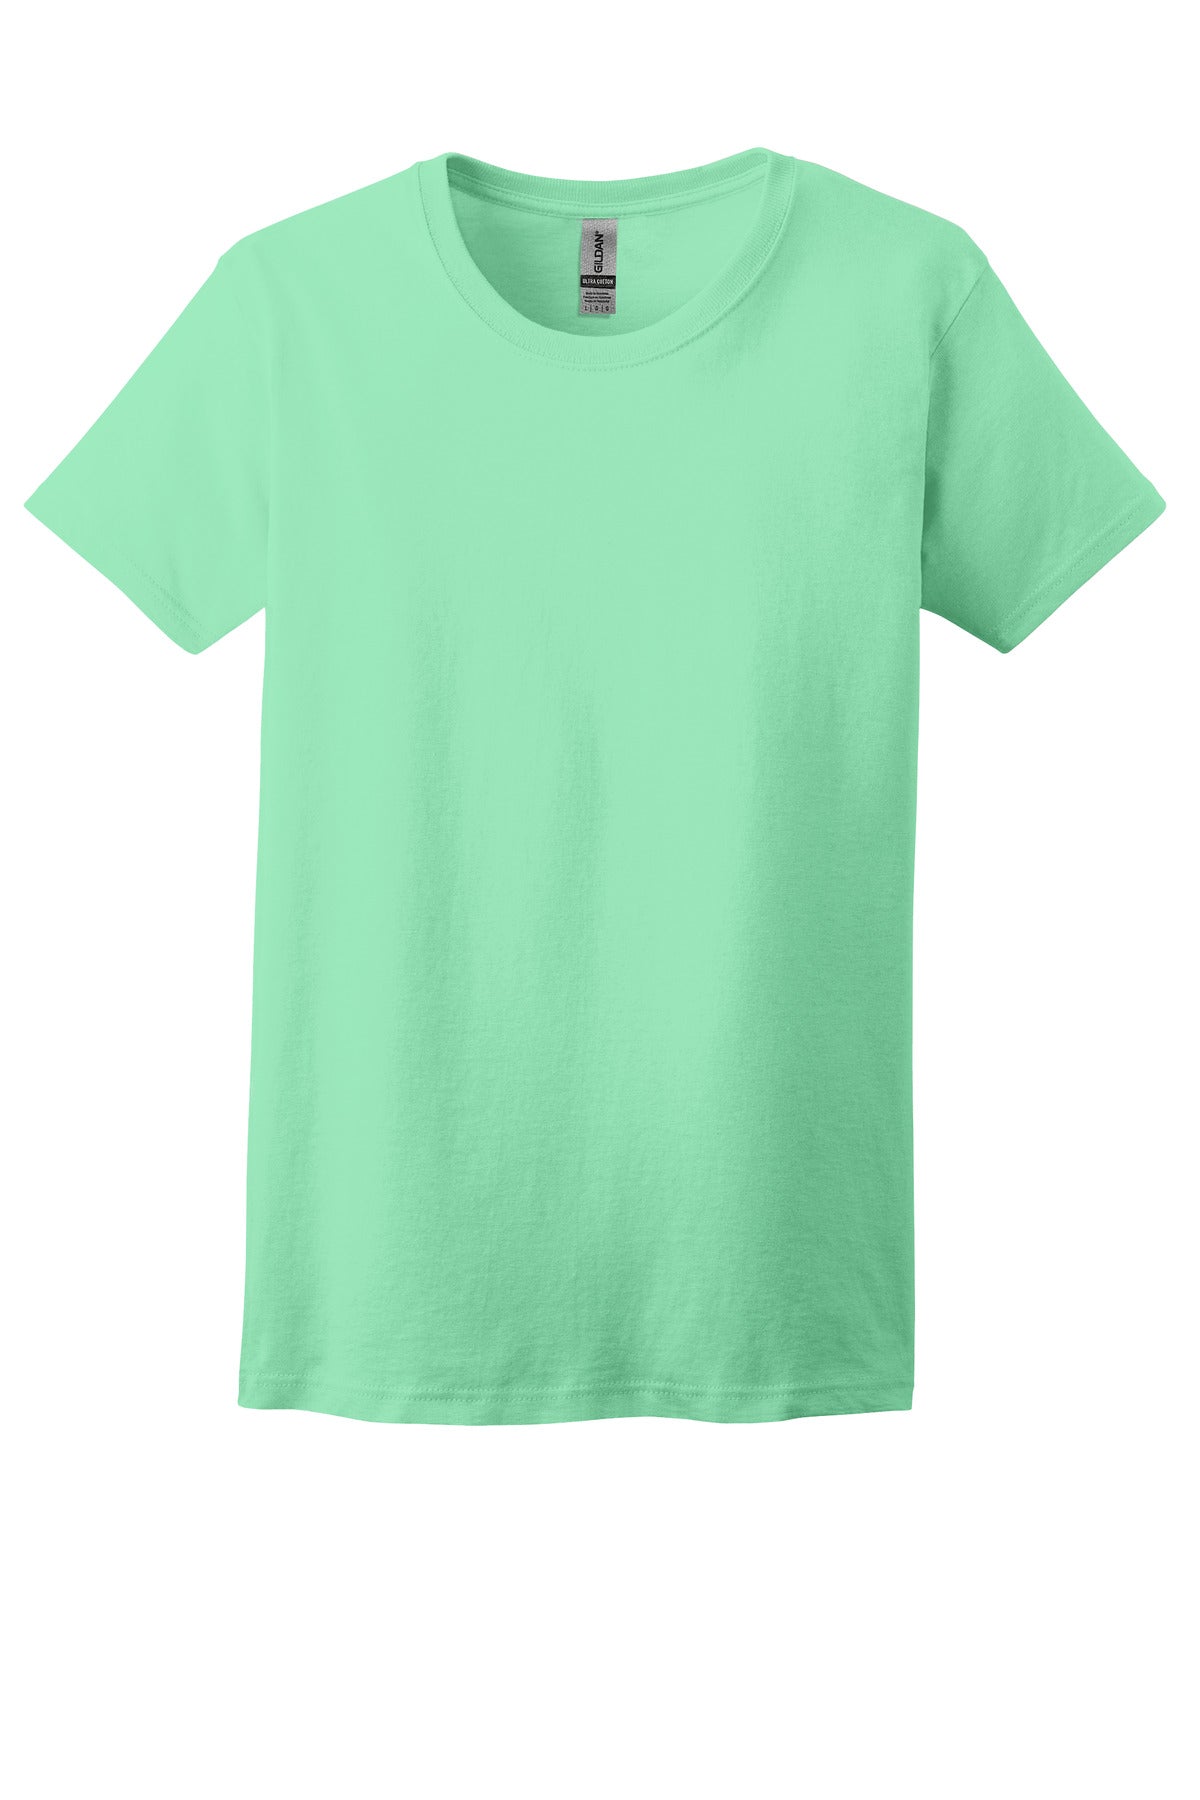 Gildan - Ladies Ultra Cotton 100% US Cotton T-Shirt. 2000L - Mint Green